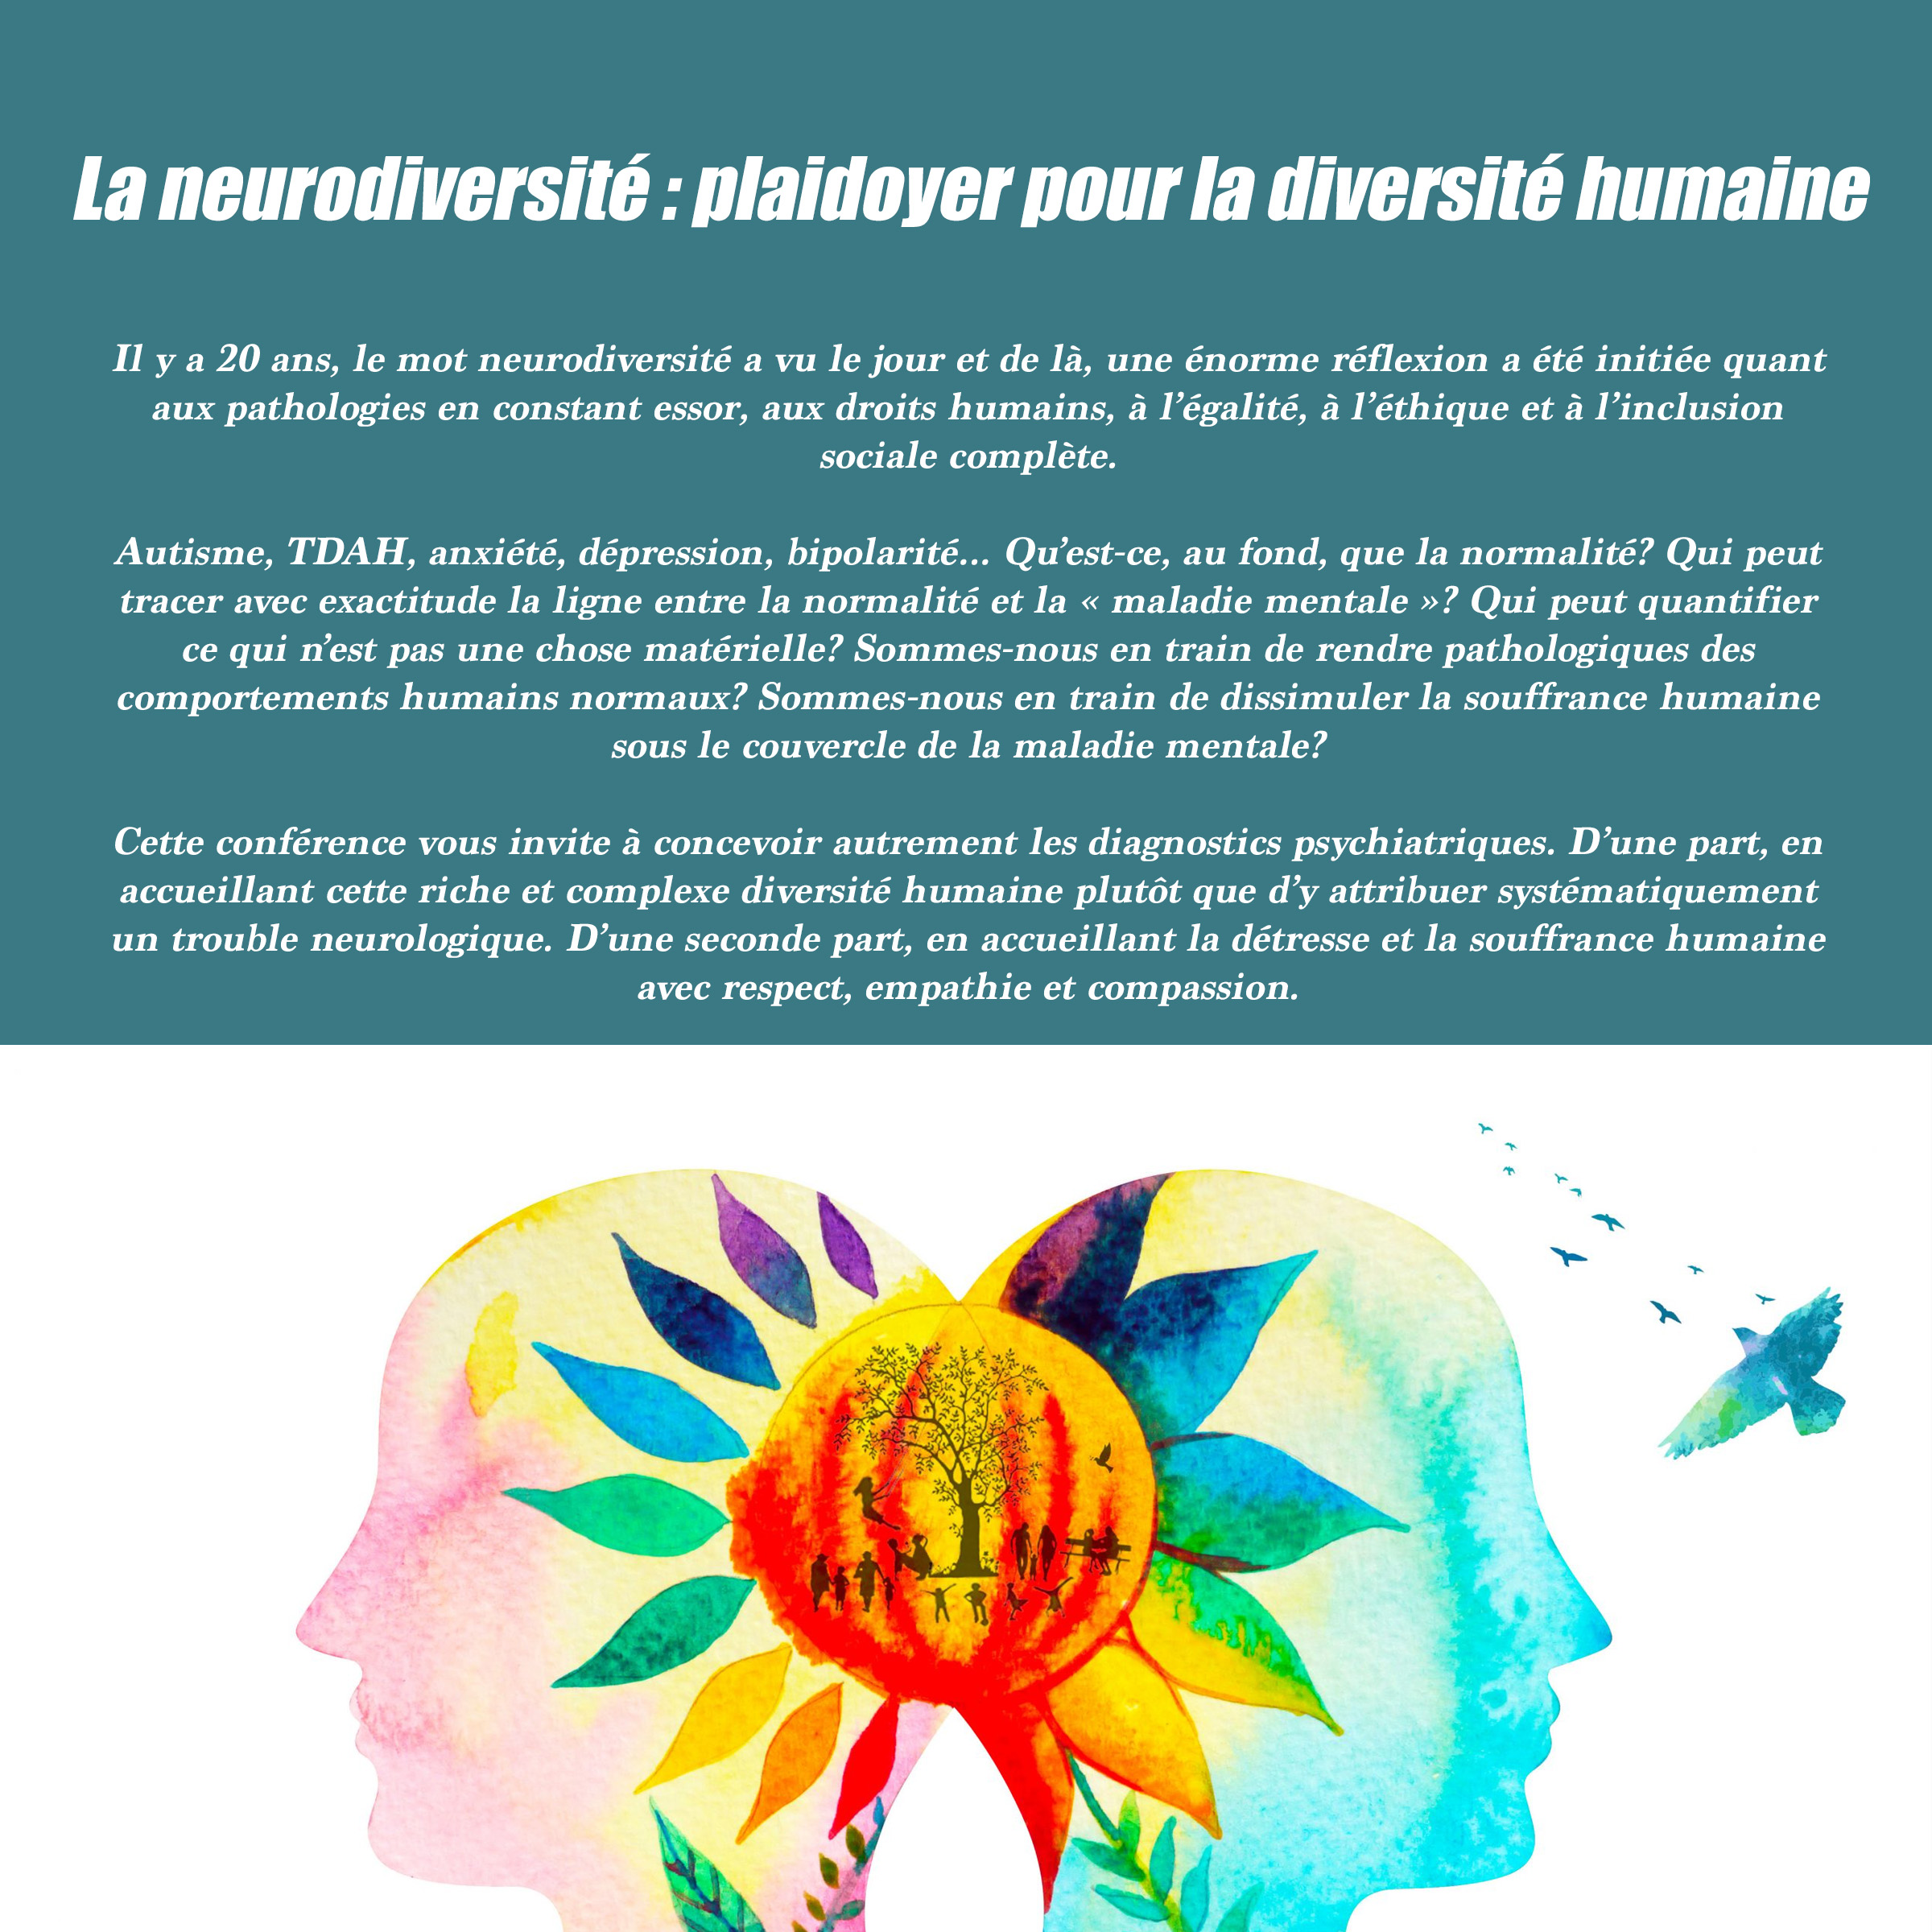 Conference_neurodiversite_plaidoyer_diversite_humaine